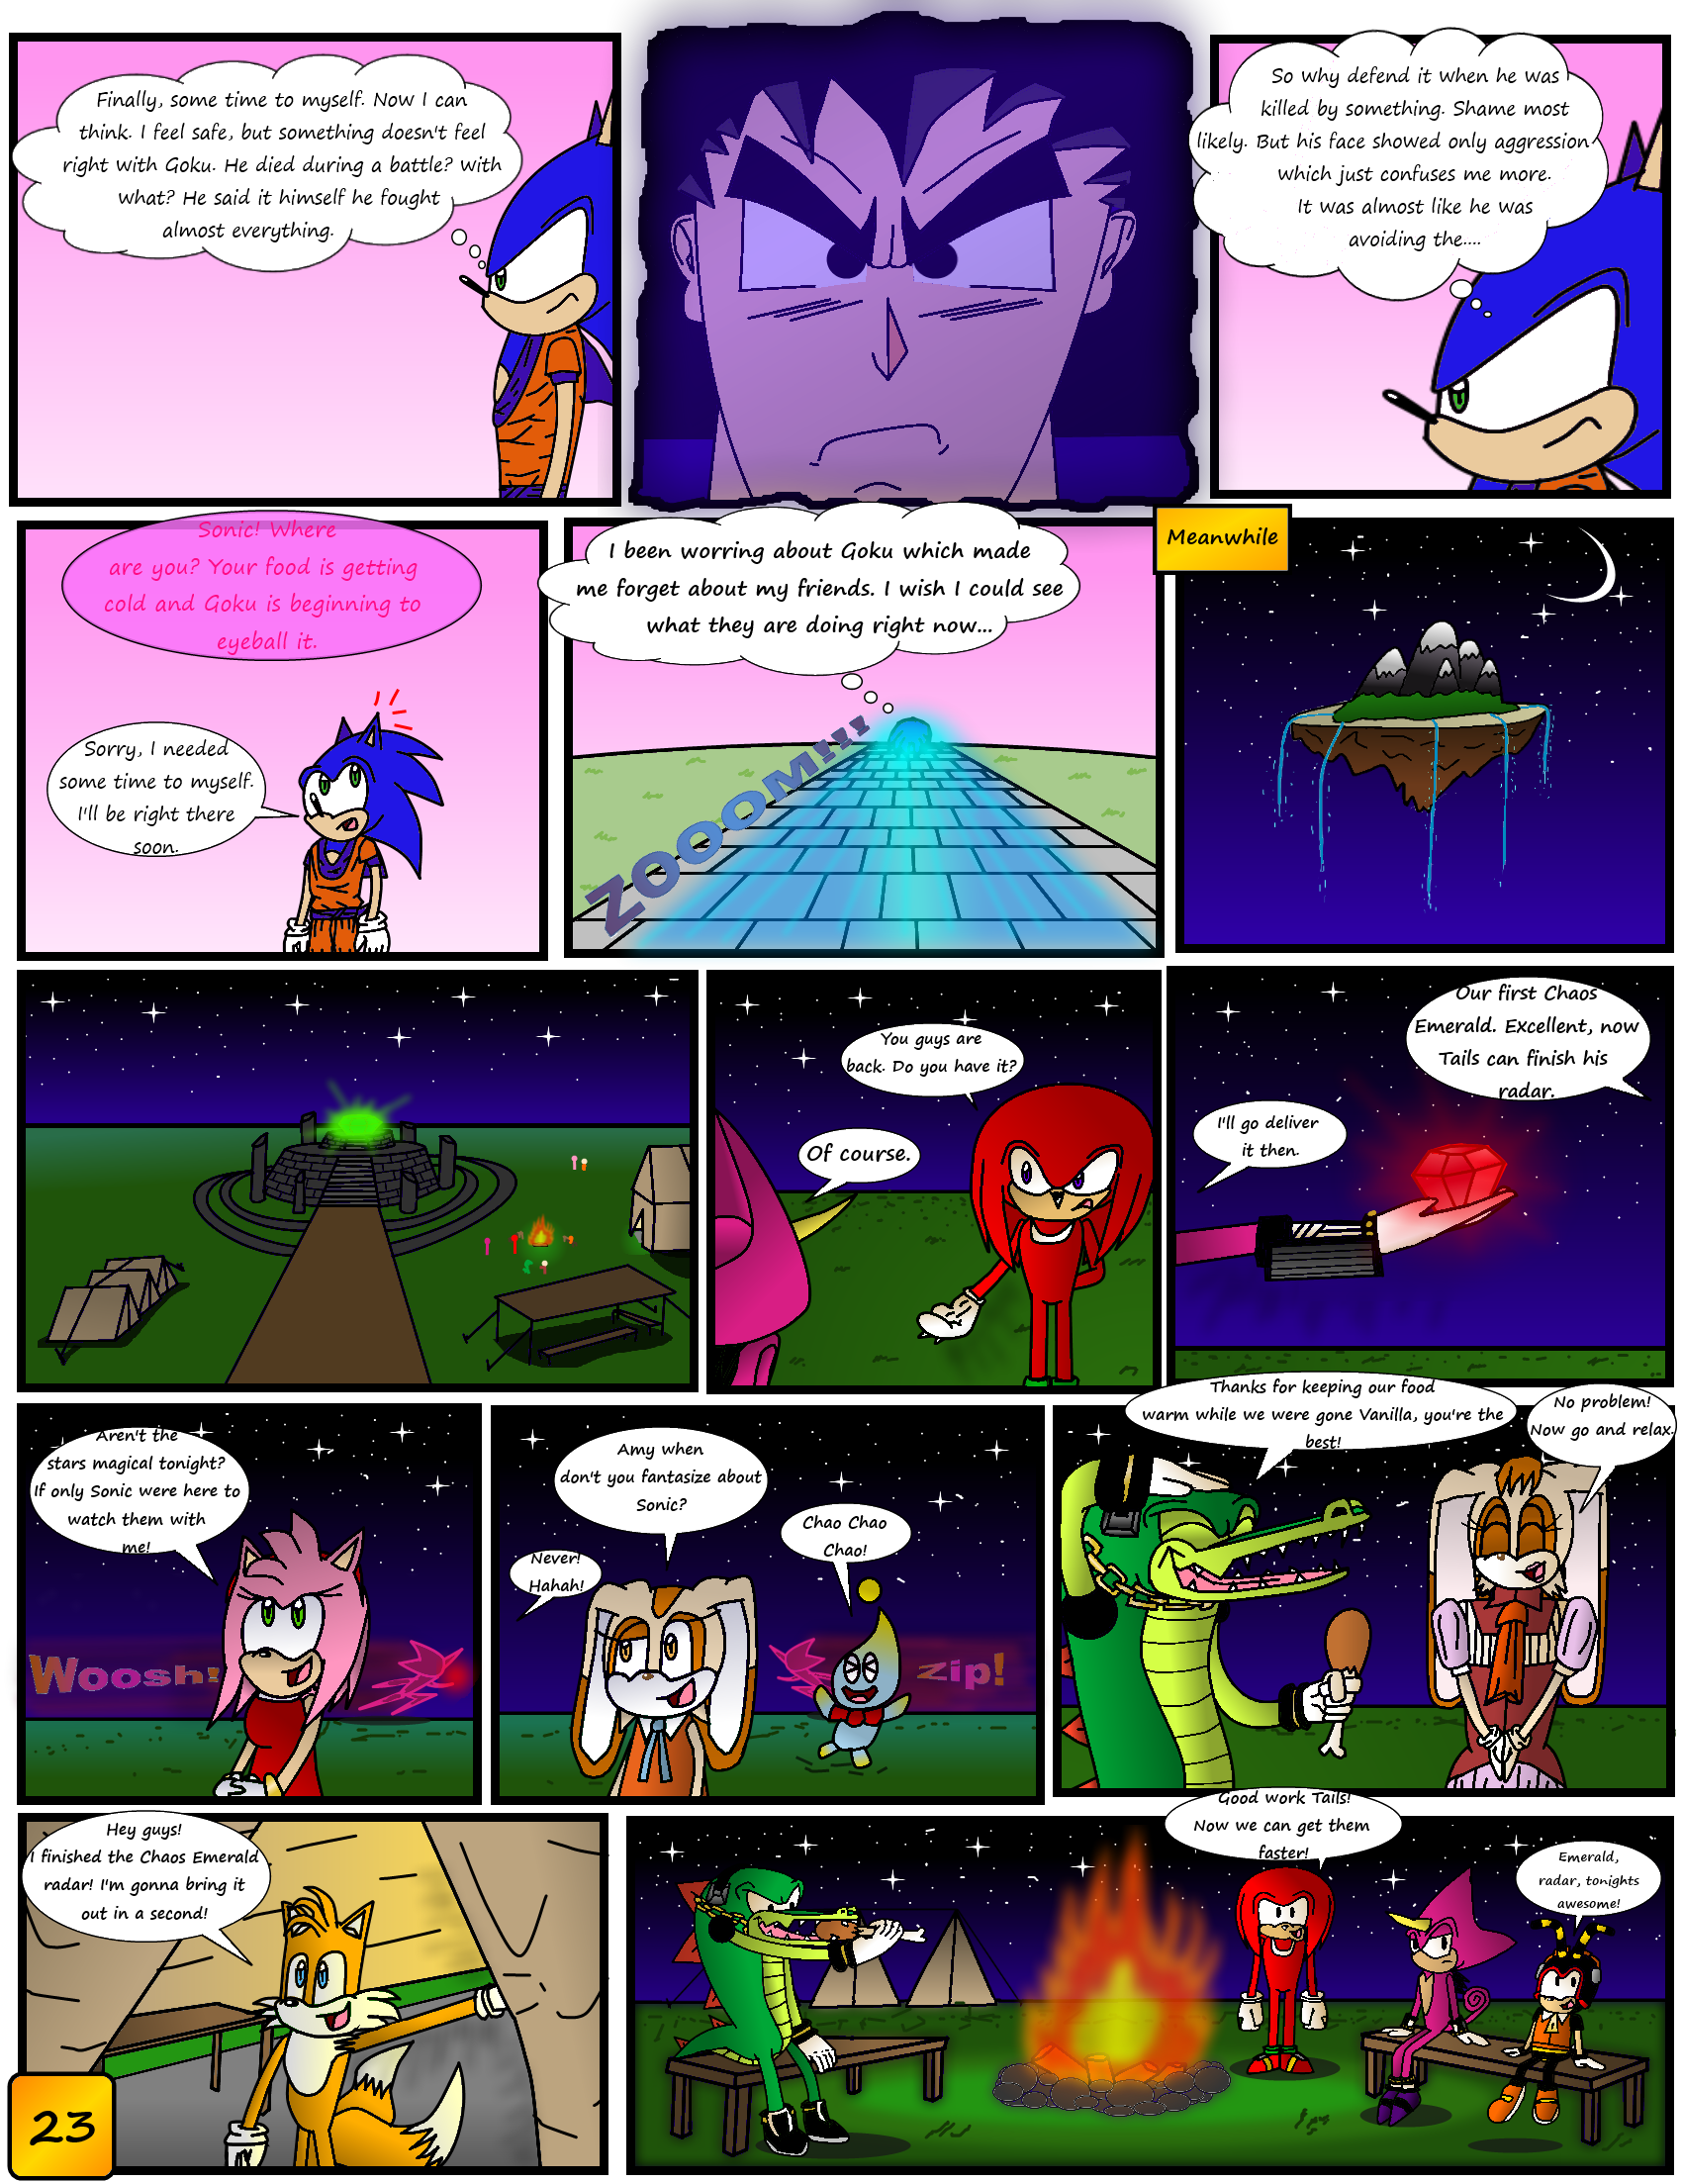 Sonic the Hedgehog Z #2 Pg. 23 June 2013 by CCI545 on DeviantArt